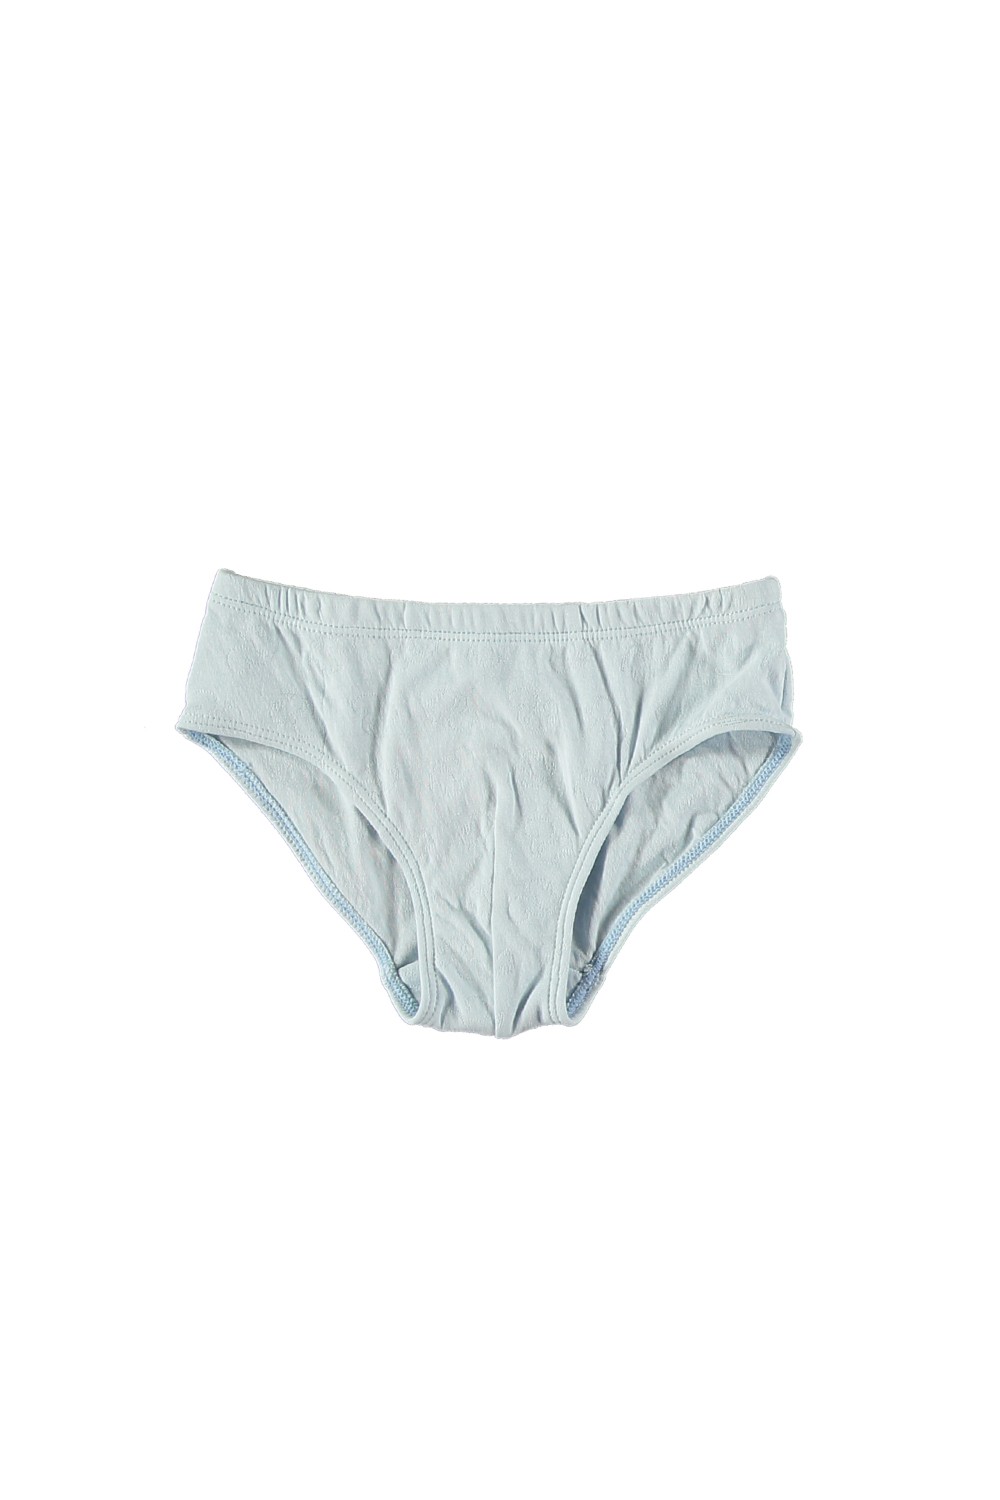 Underwear mayo boys briefs 100% organic cotton for boys 3-14 years